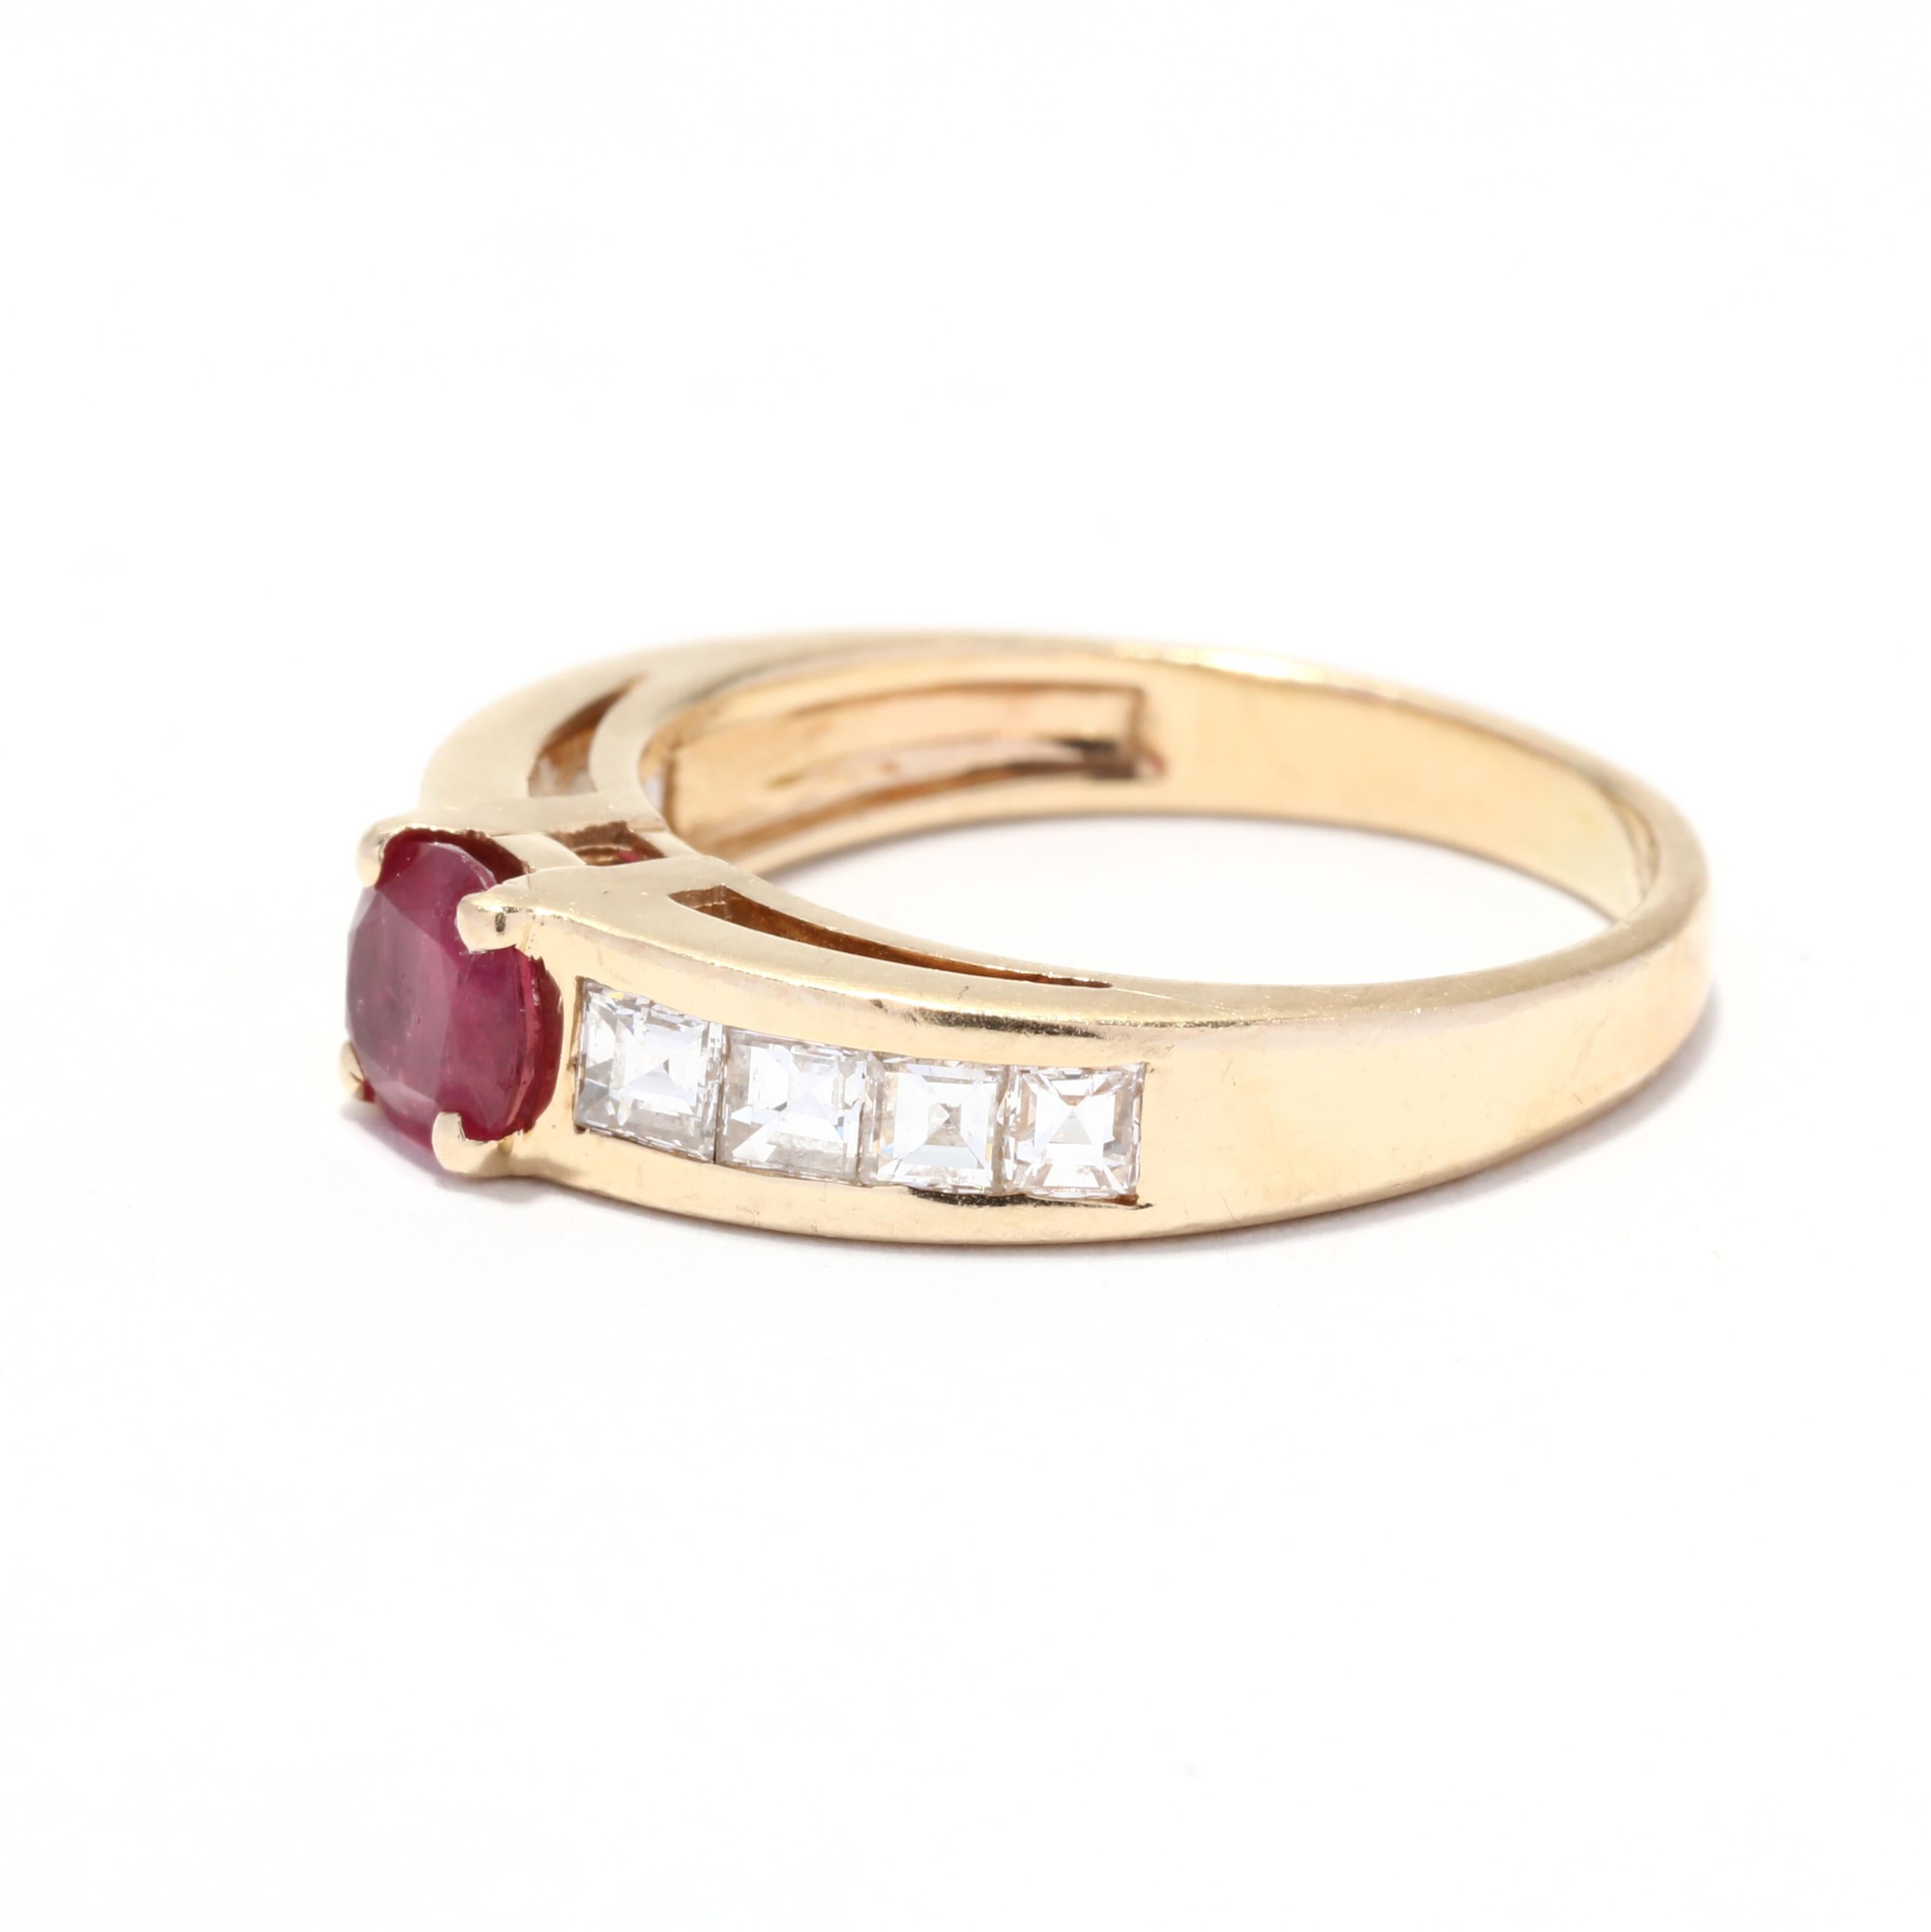 Oval Cut Ruby Diamond Ring, Oval Ruby Ring, 14K Gold, Square Diamond Ring, July Birthston